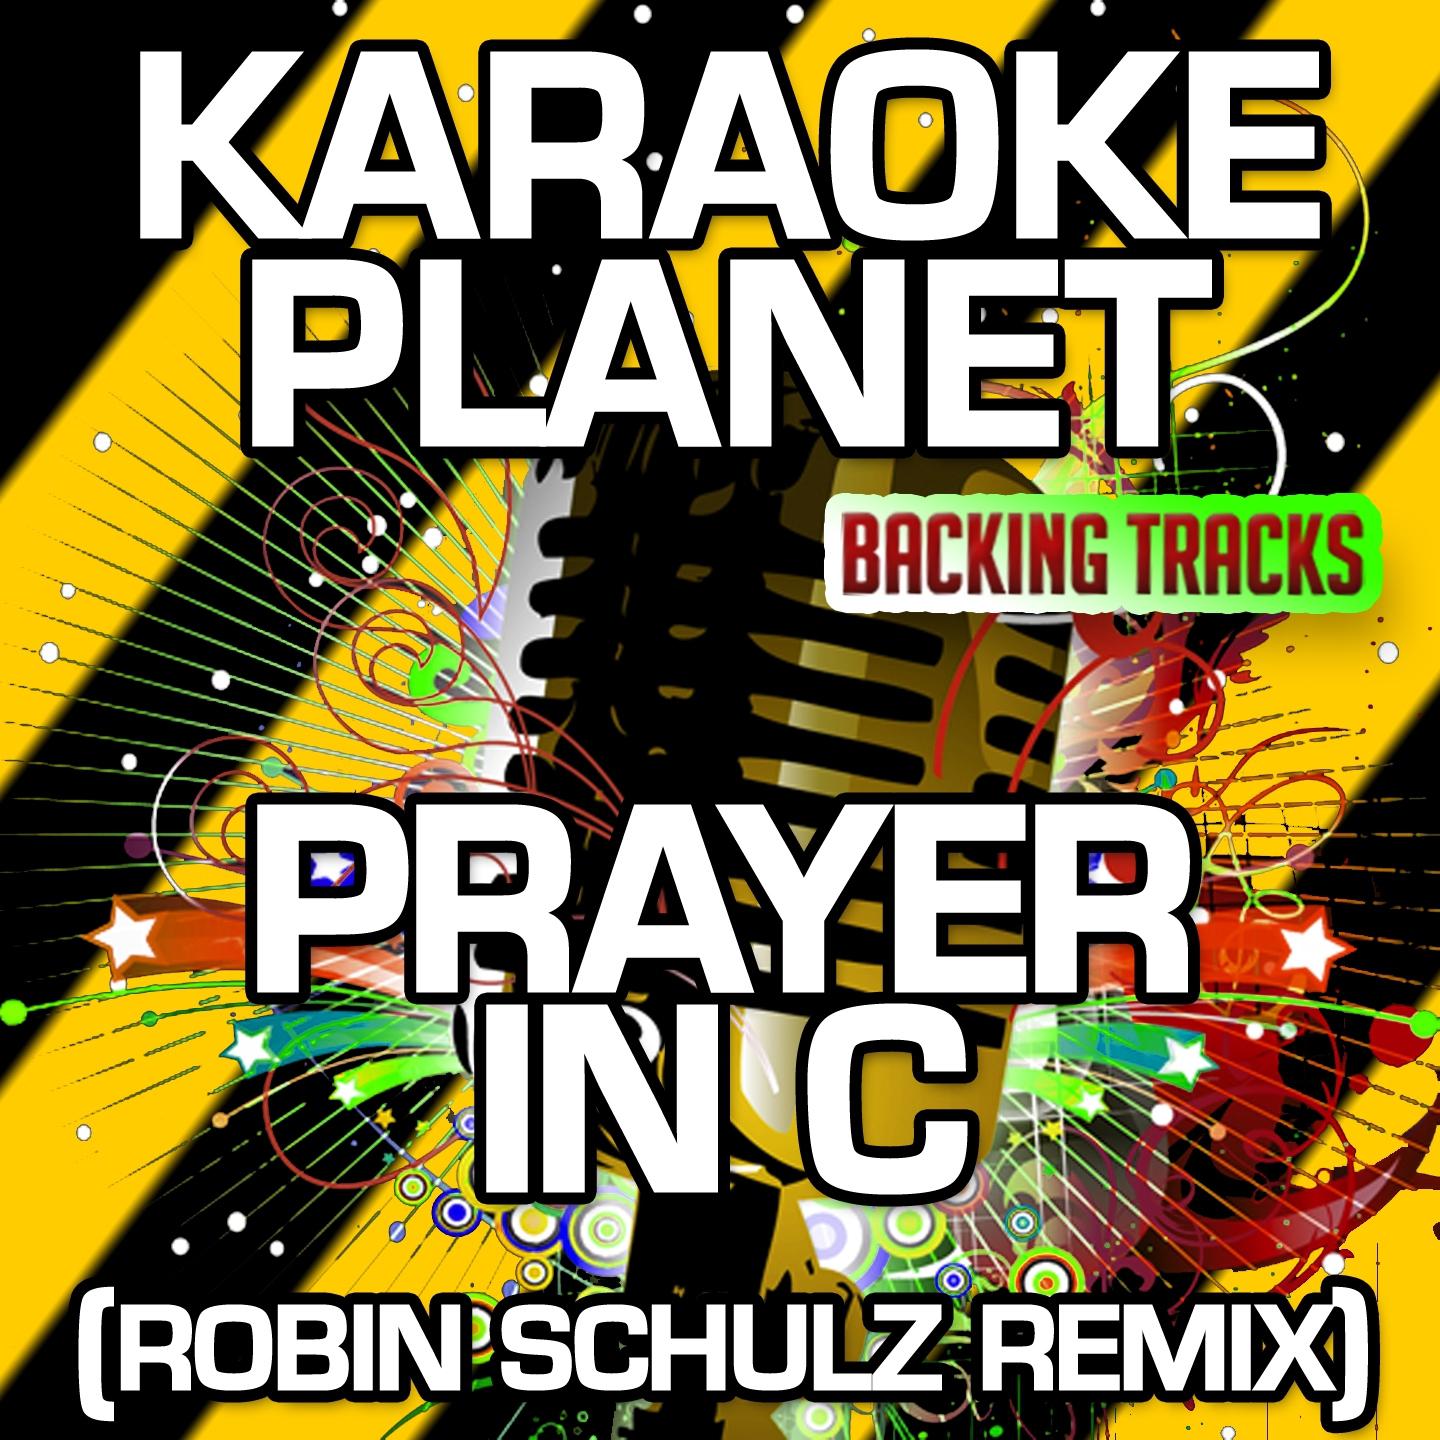 Prayer in C (Robin Schulz Remix) [Karaoke Version] (Originally Performed By Lilly Wood, The Prick & Robin Schulz)